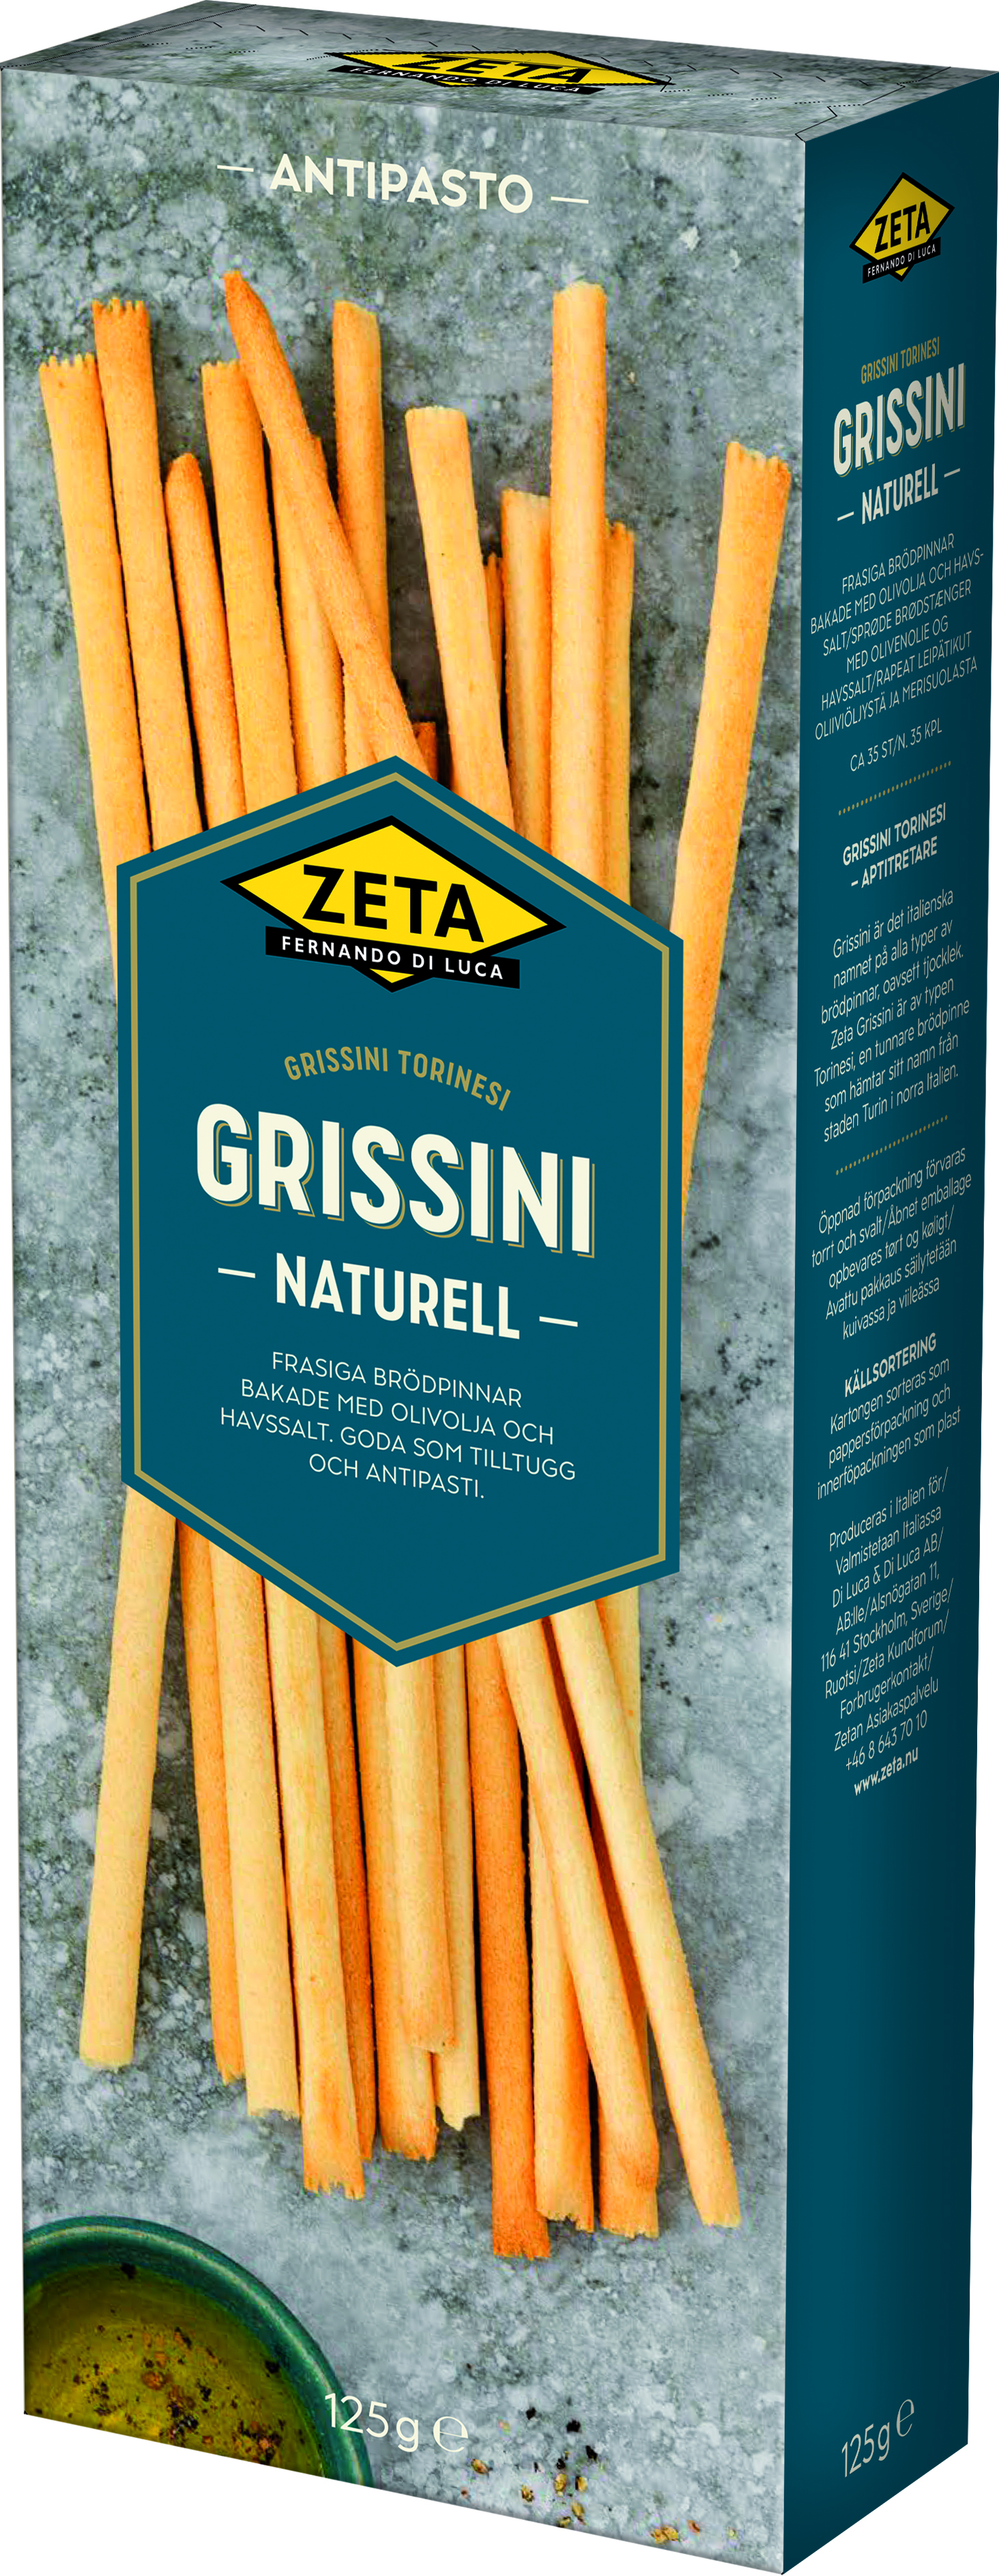 Grissini Naturell – Zeta